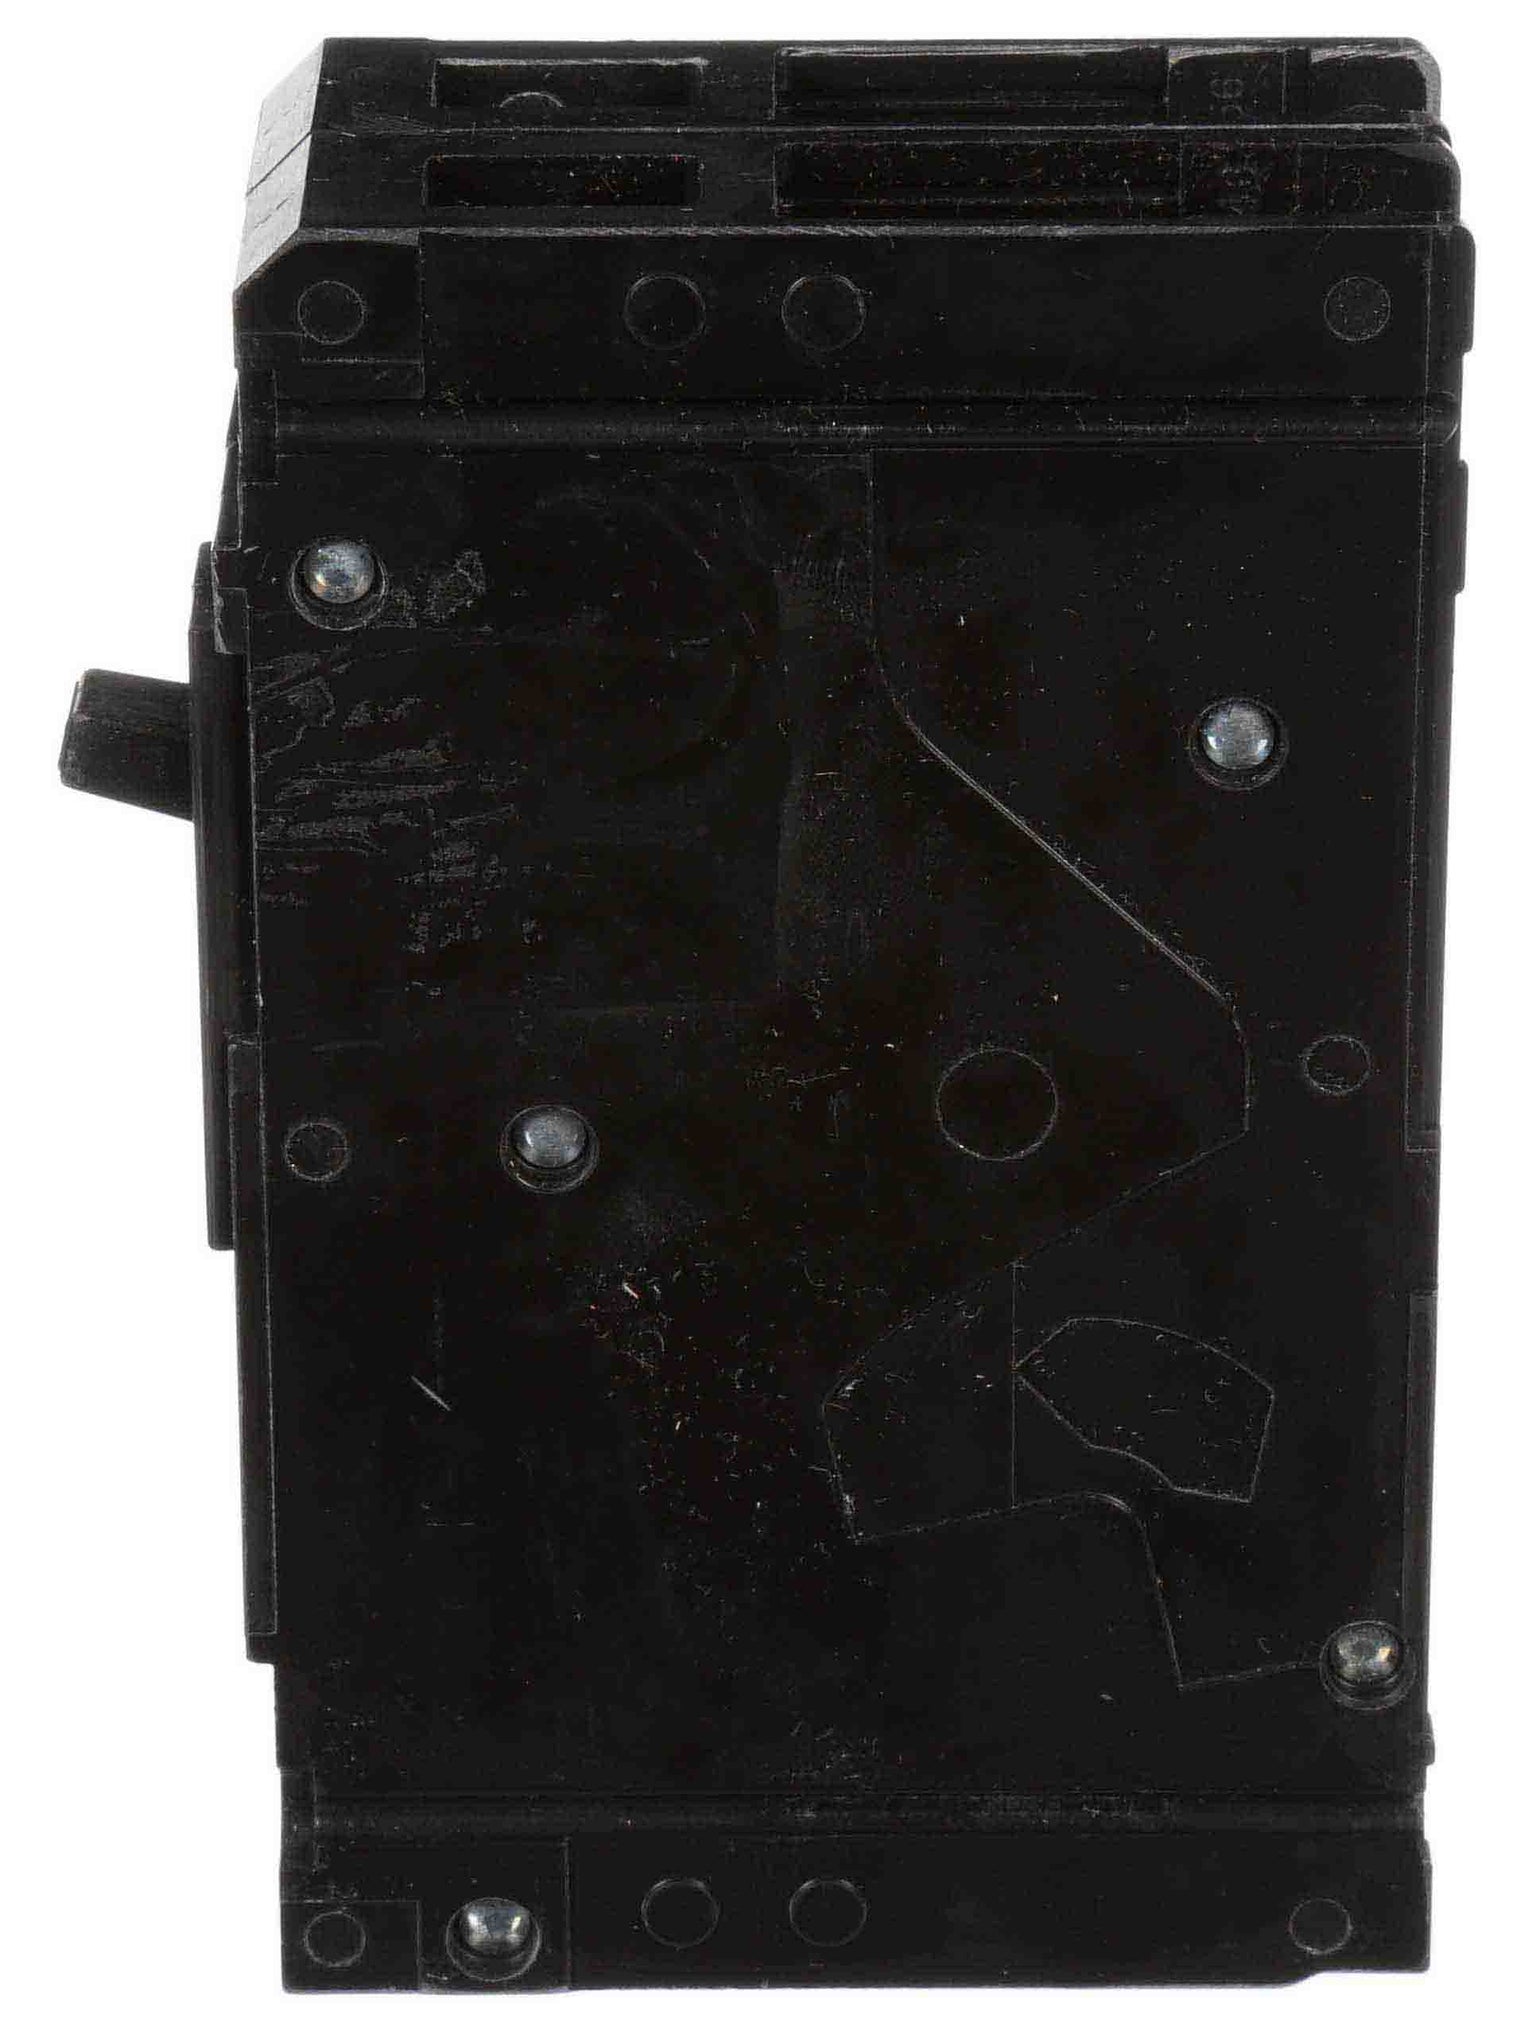 ED42B090 - Siemens - Molded Case Circuit Breaker